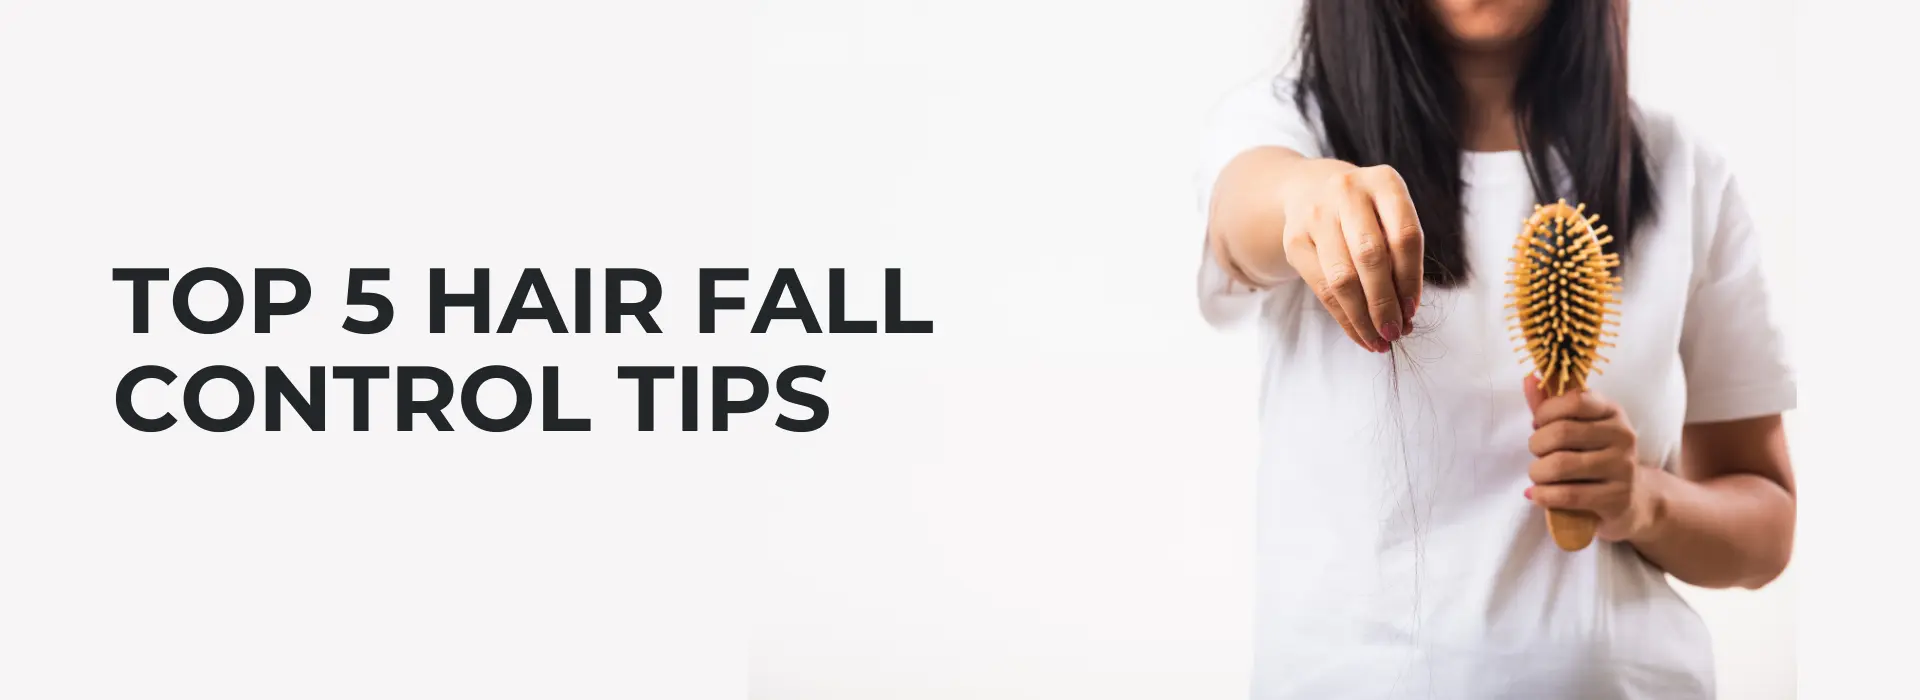 Top 5 Hair Fall Control Tips